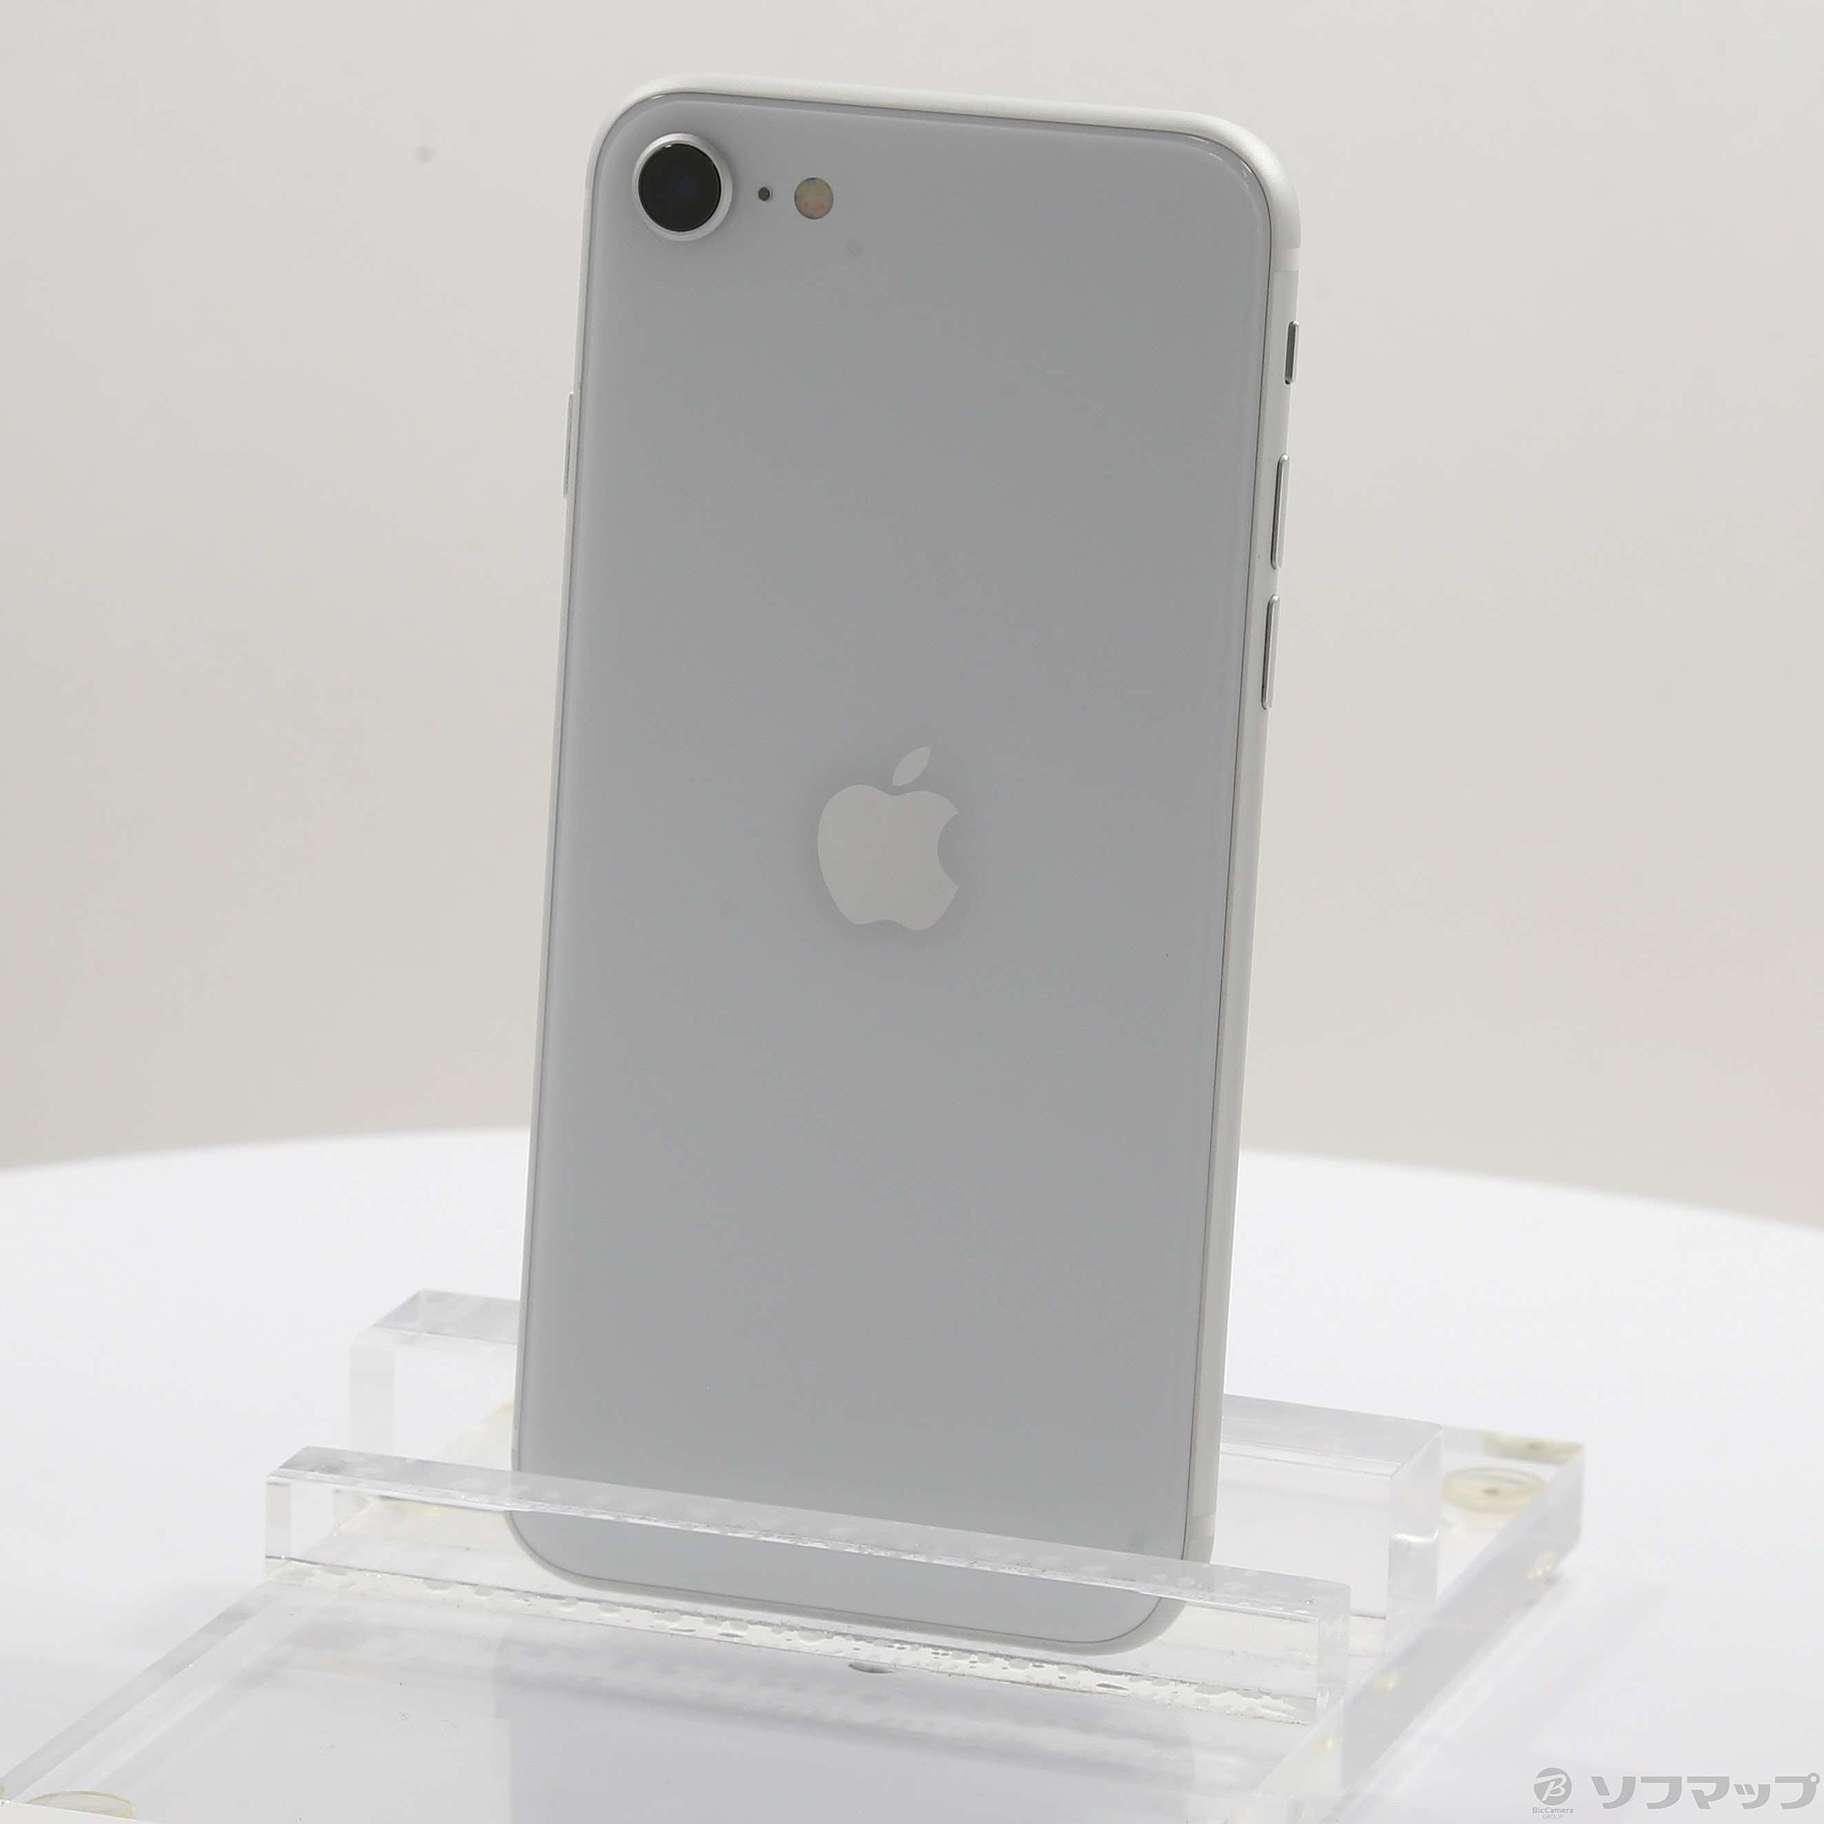 iPhone SE 2 第2世代 256GB SIMフリー 中古 スマホ スマートフォン Cランク 本体